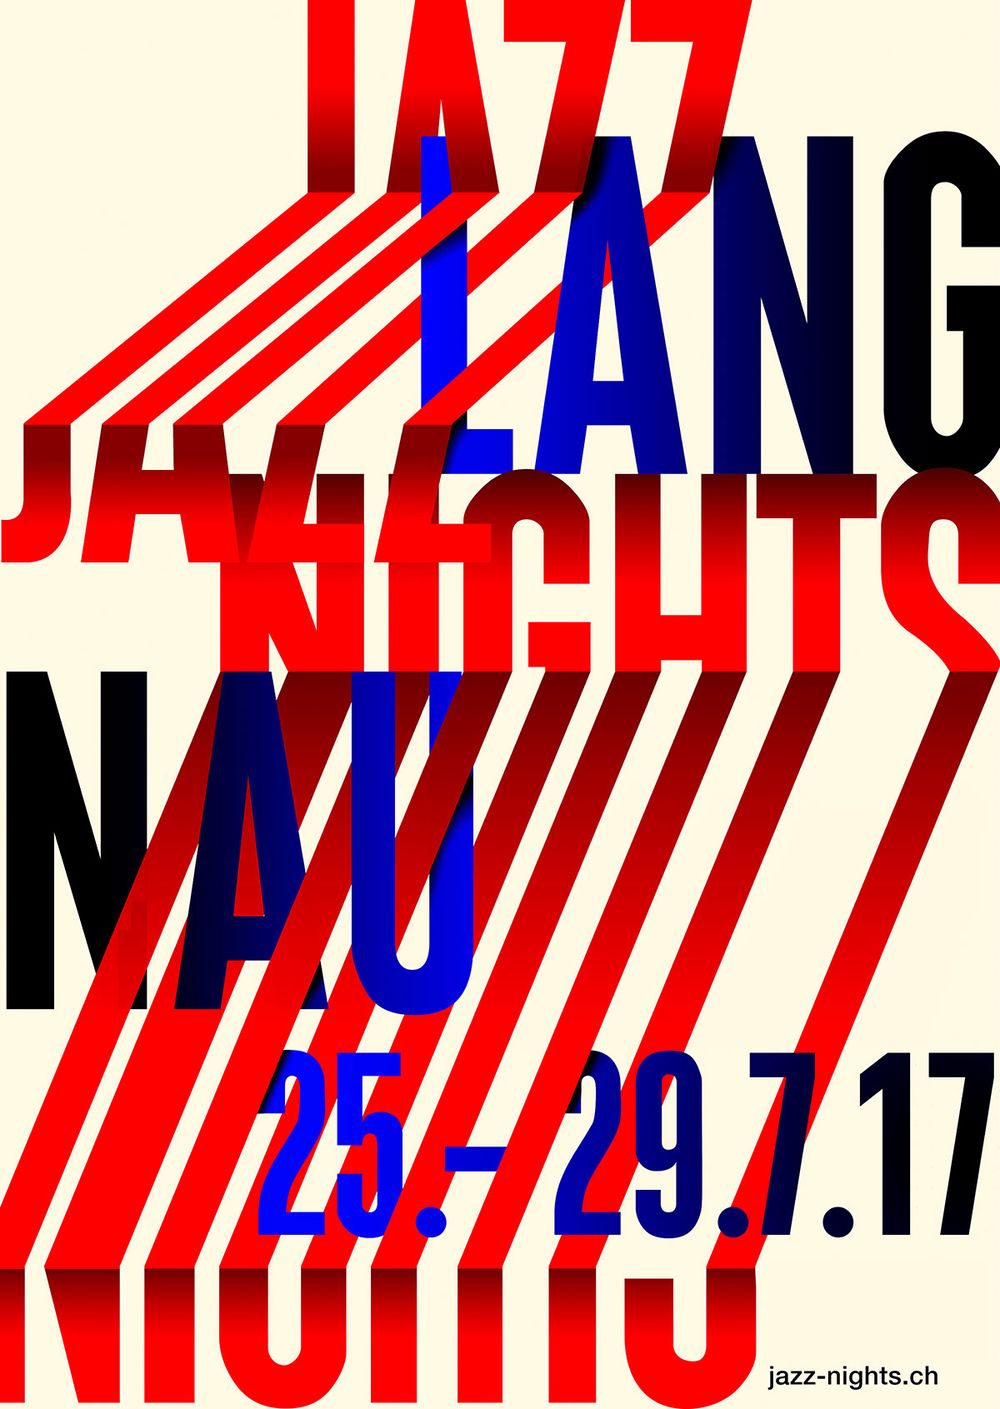 Langnau Jazz Nights 2017